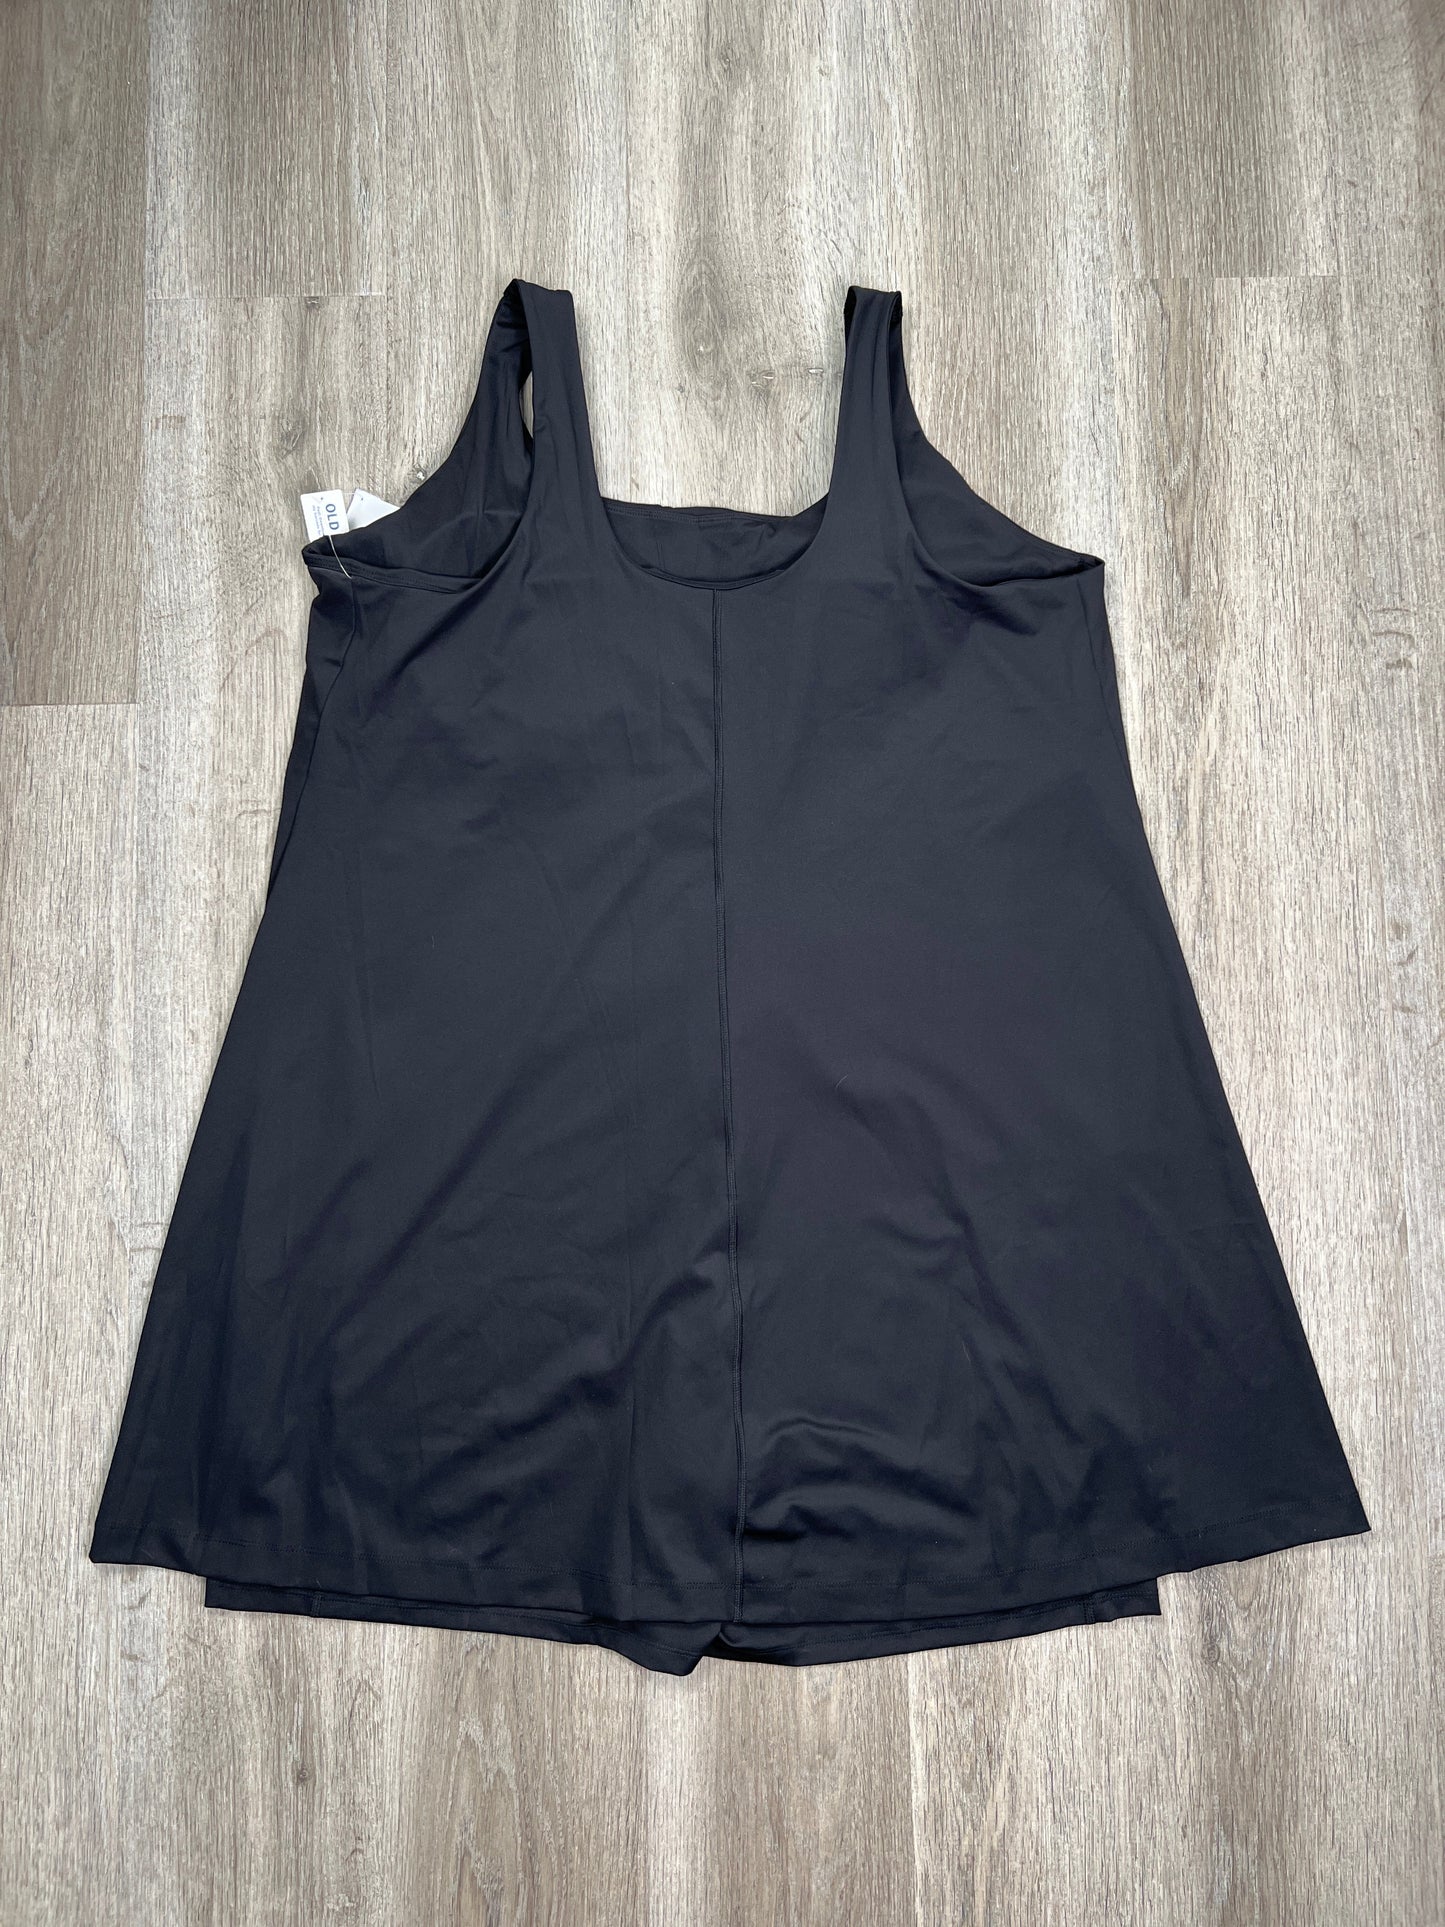 Black Athletic Dress Old Navy, Size 3x